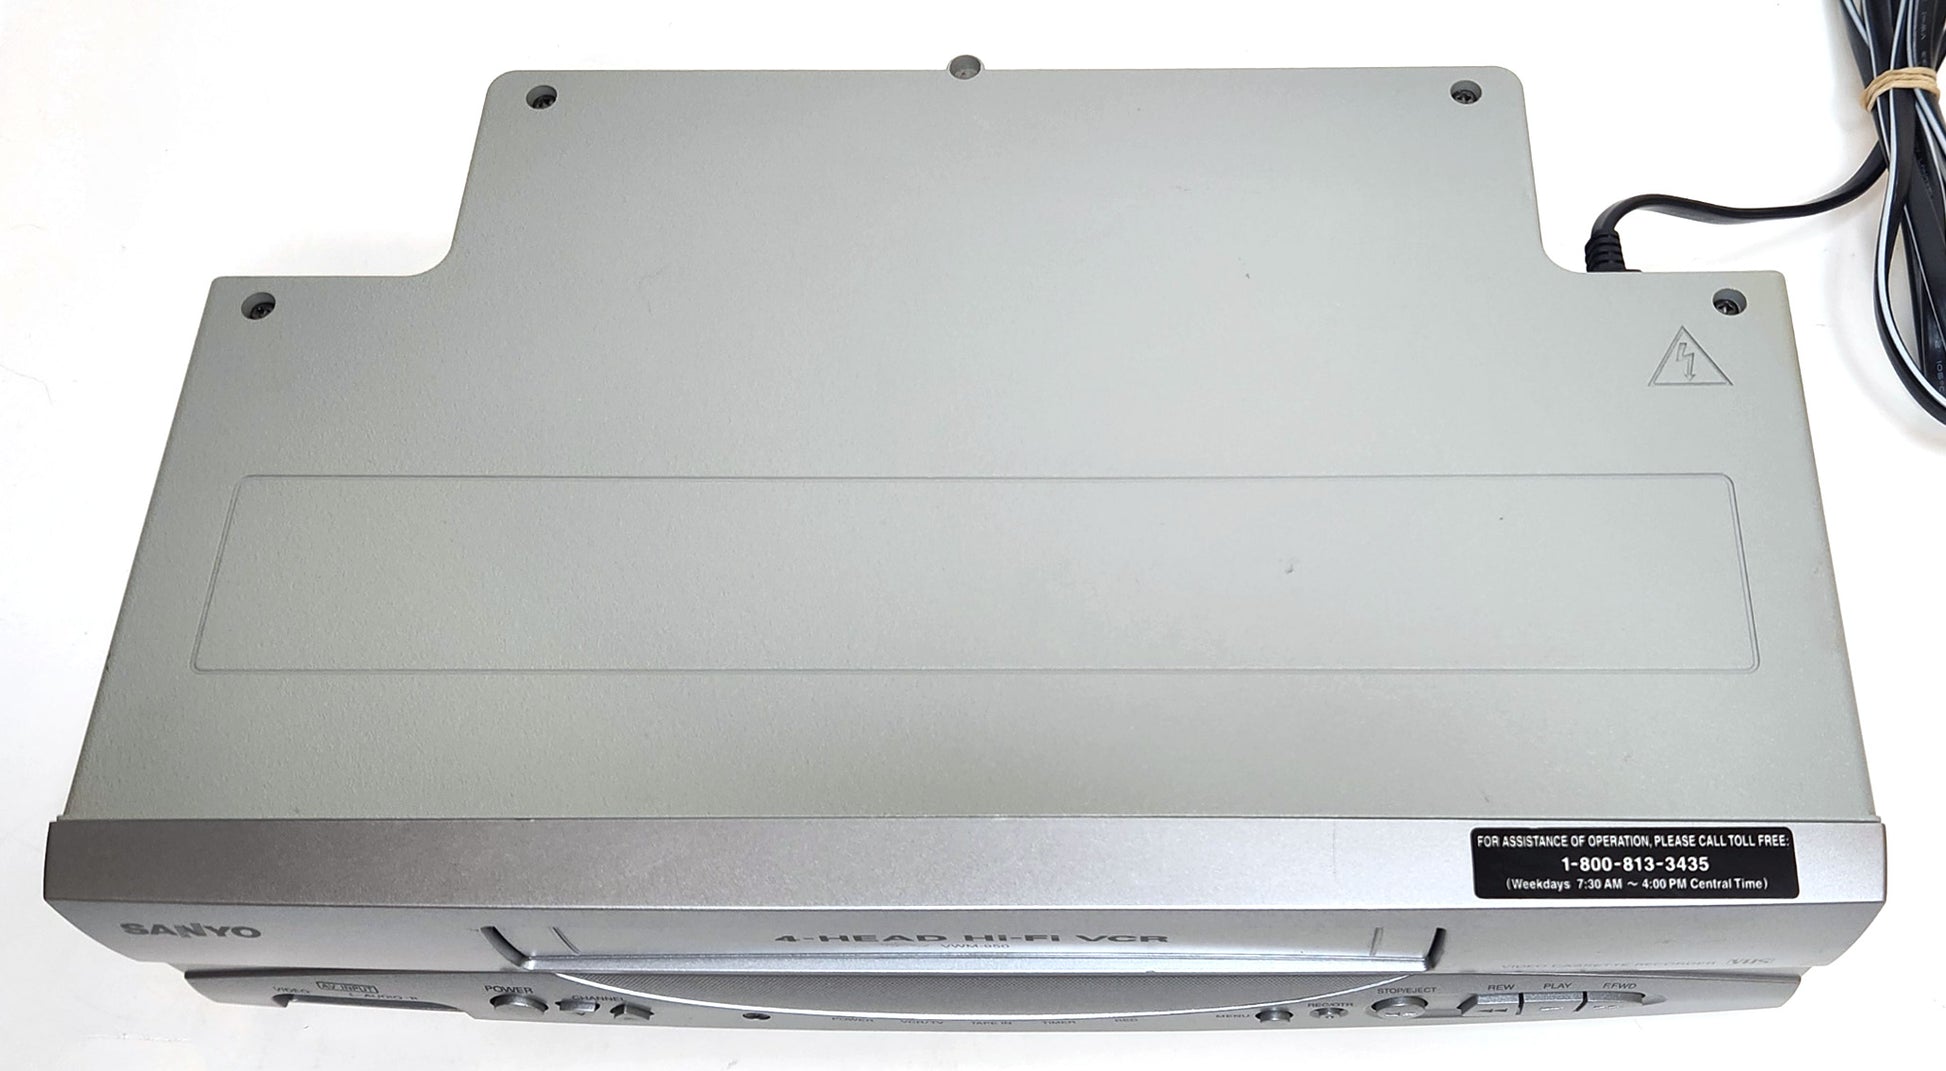 Sanyo VWM-950 VCR, 4-Head Hi-Fi Stereo - Top